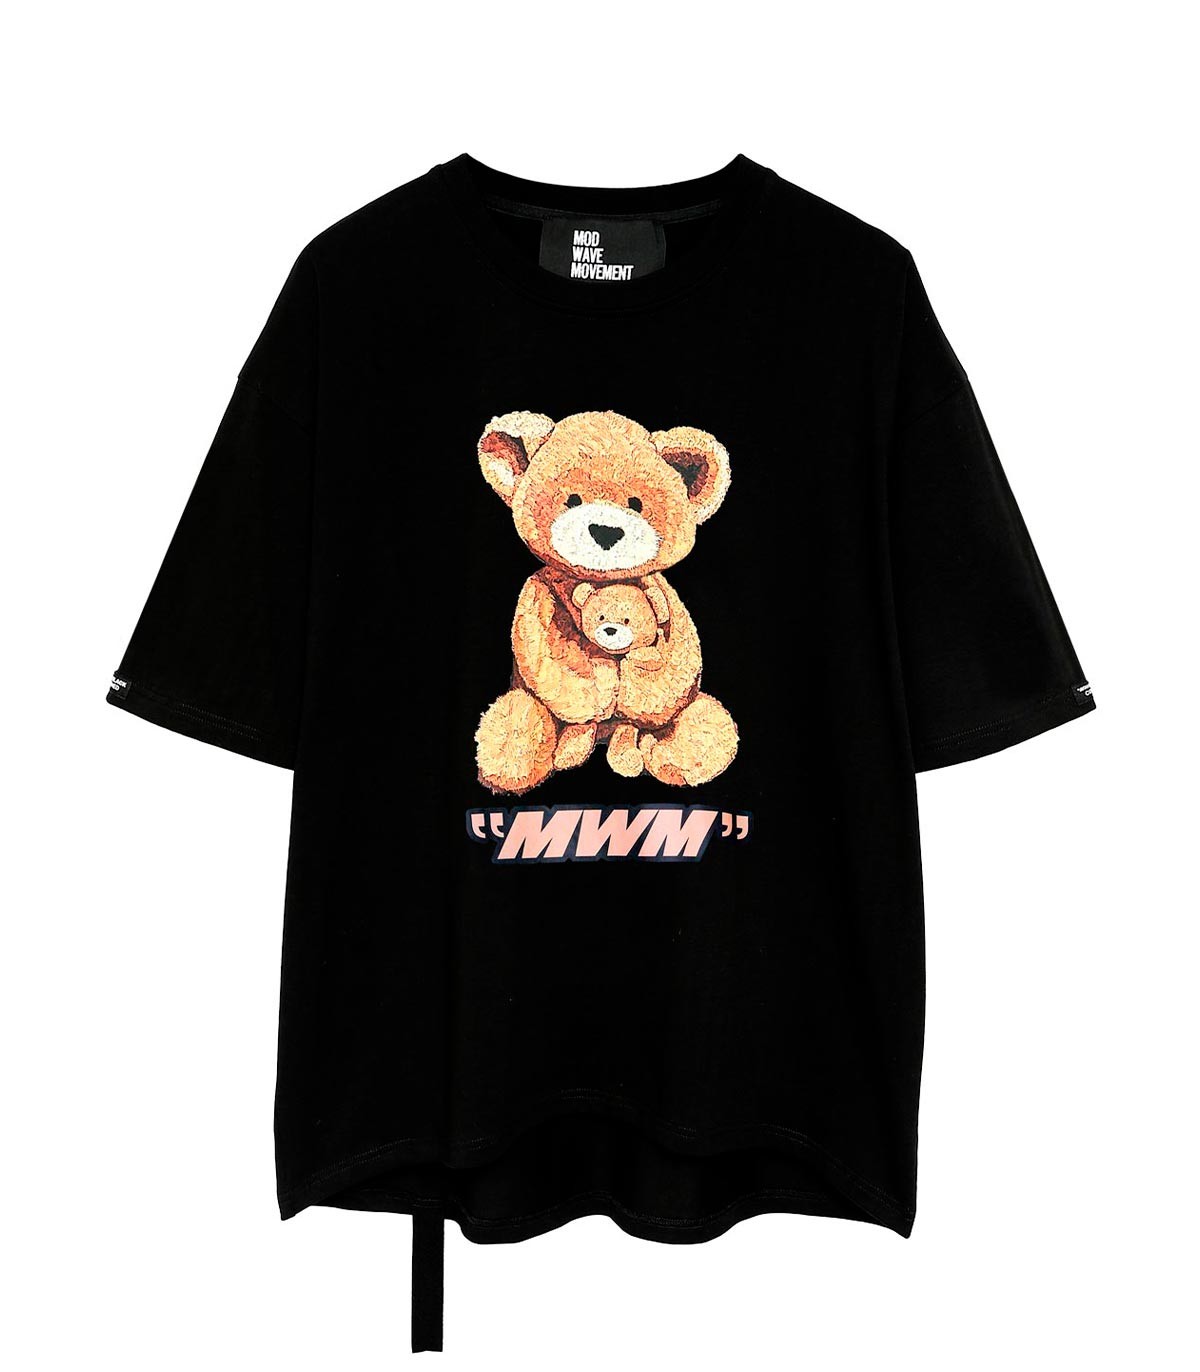 Mod Wave Movement - Camiseta Teddy - Negro